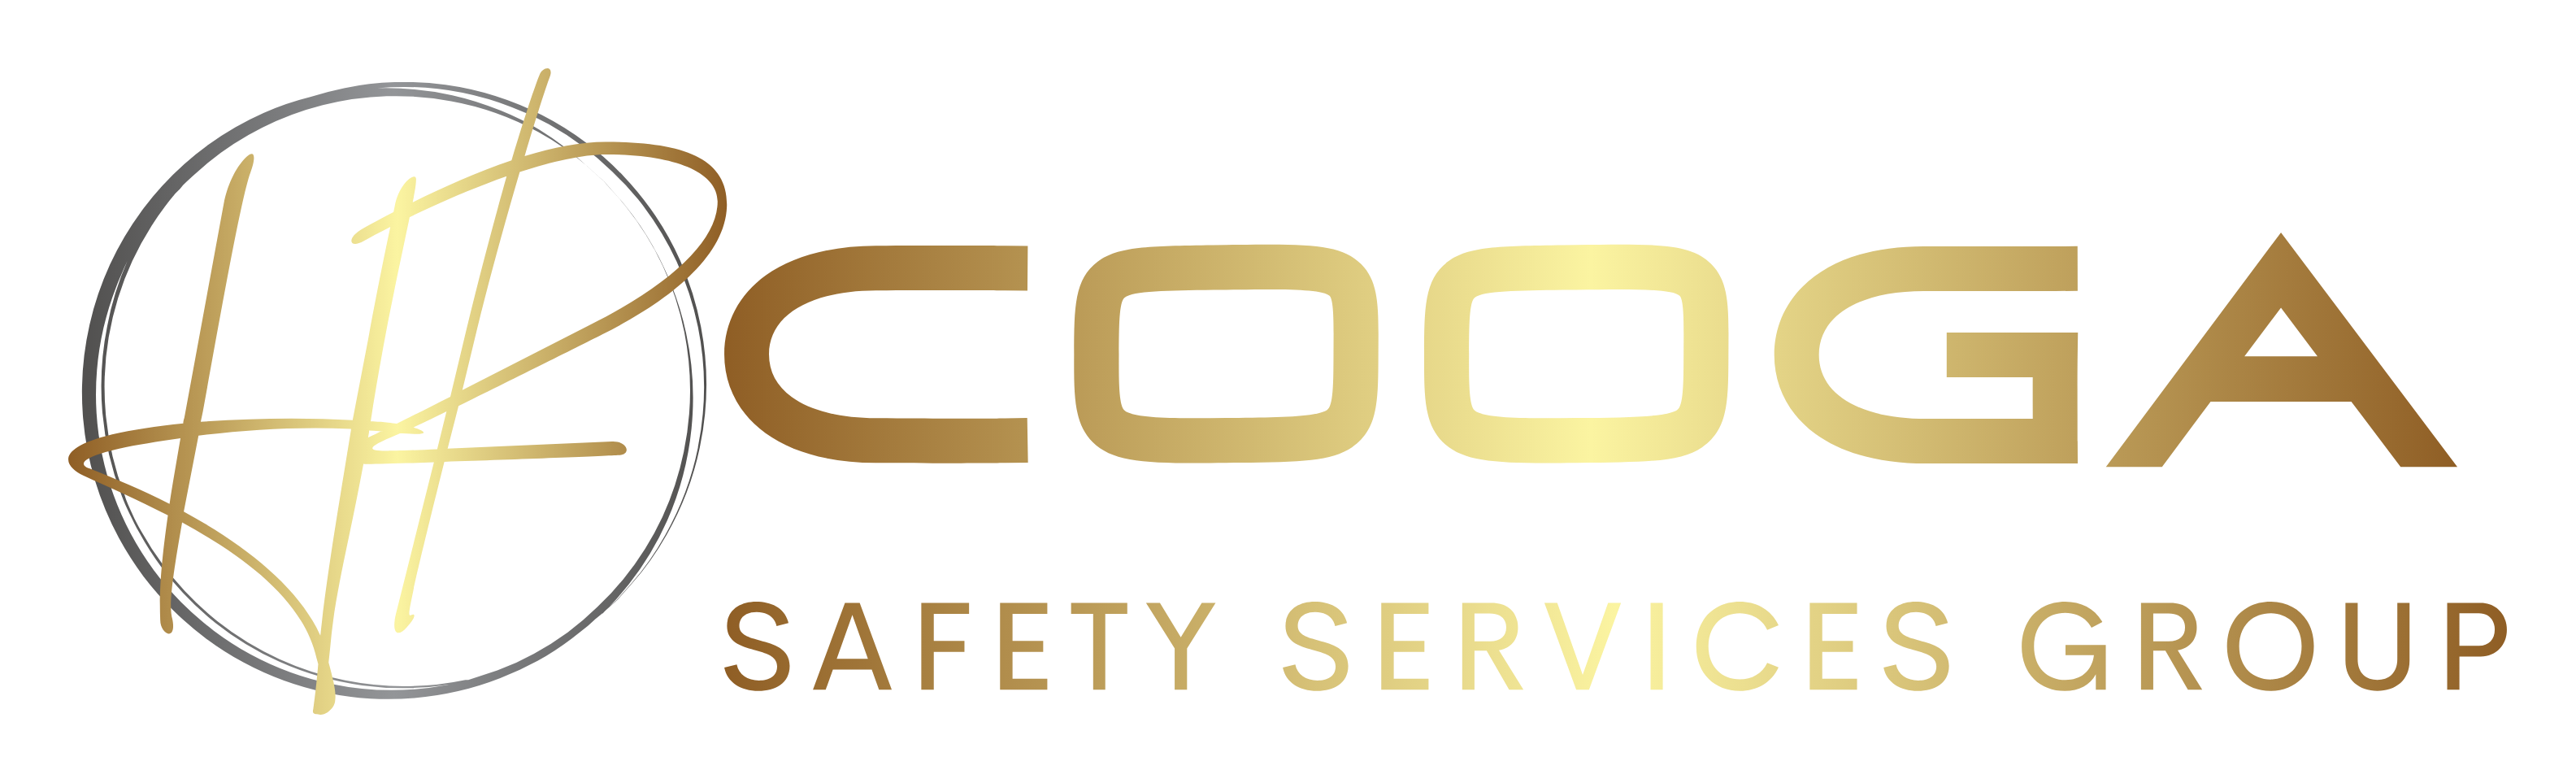 Cooga Safety Ltd